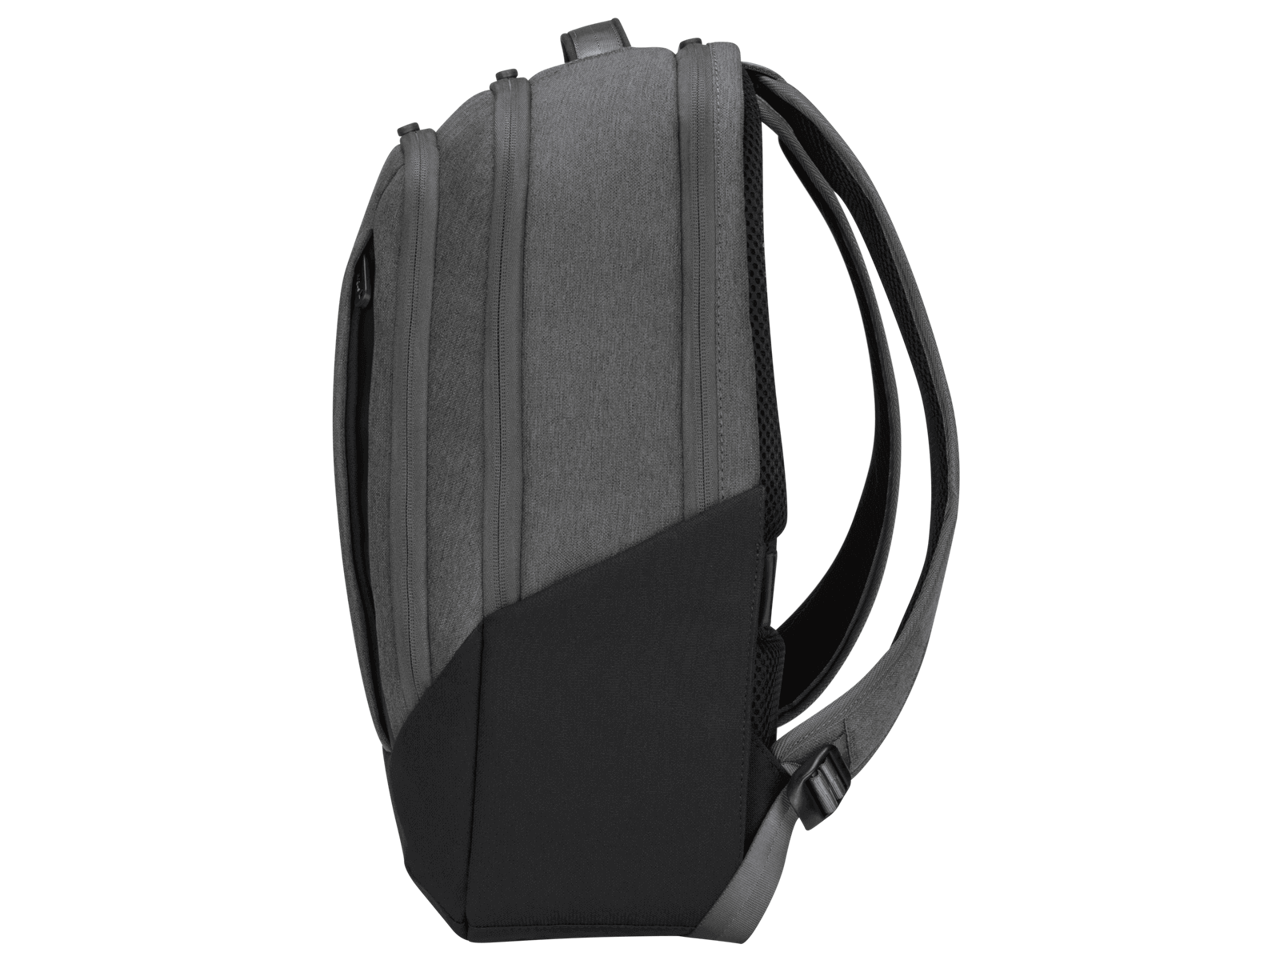 Targus 15.6" Cypress Hero Backpack with EcoSmart Light Gray